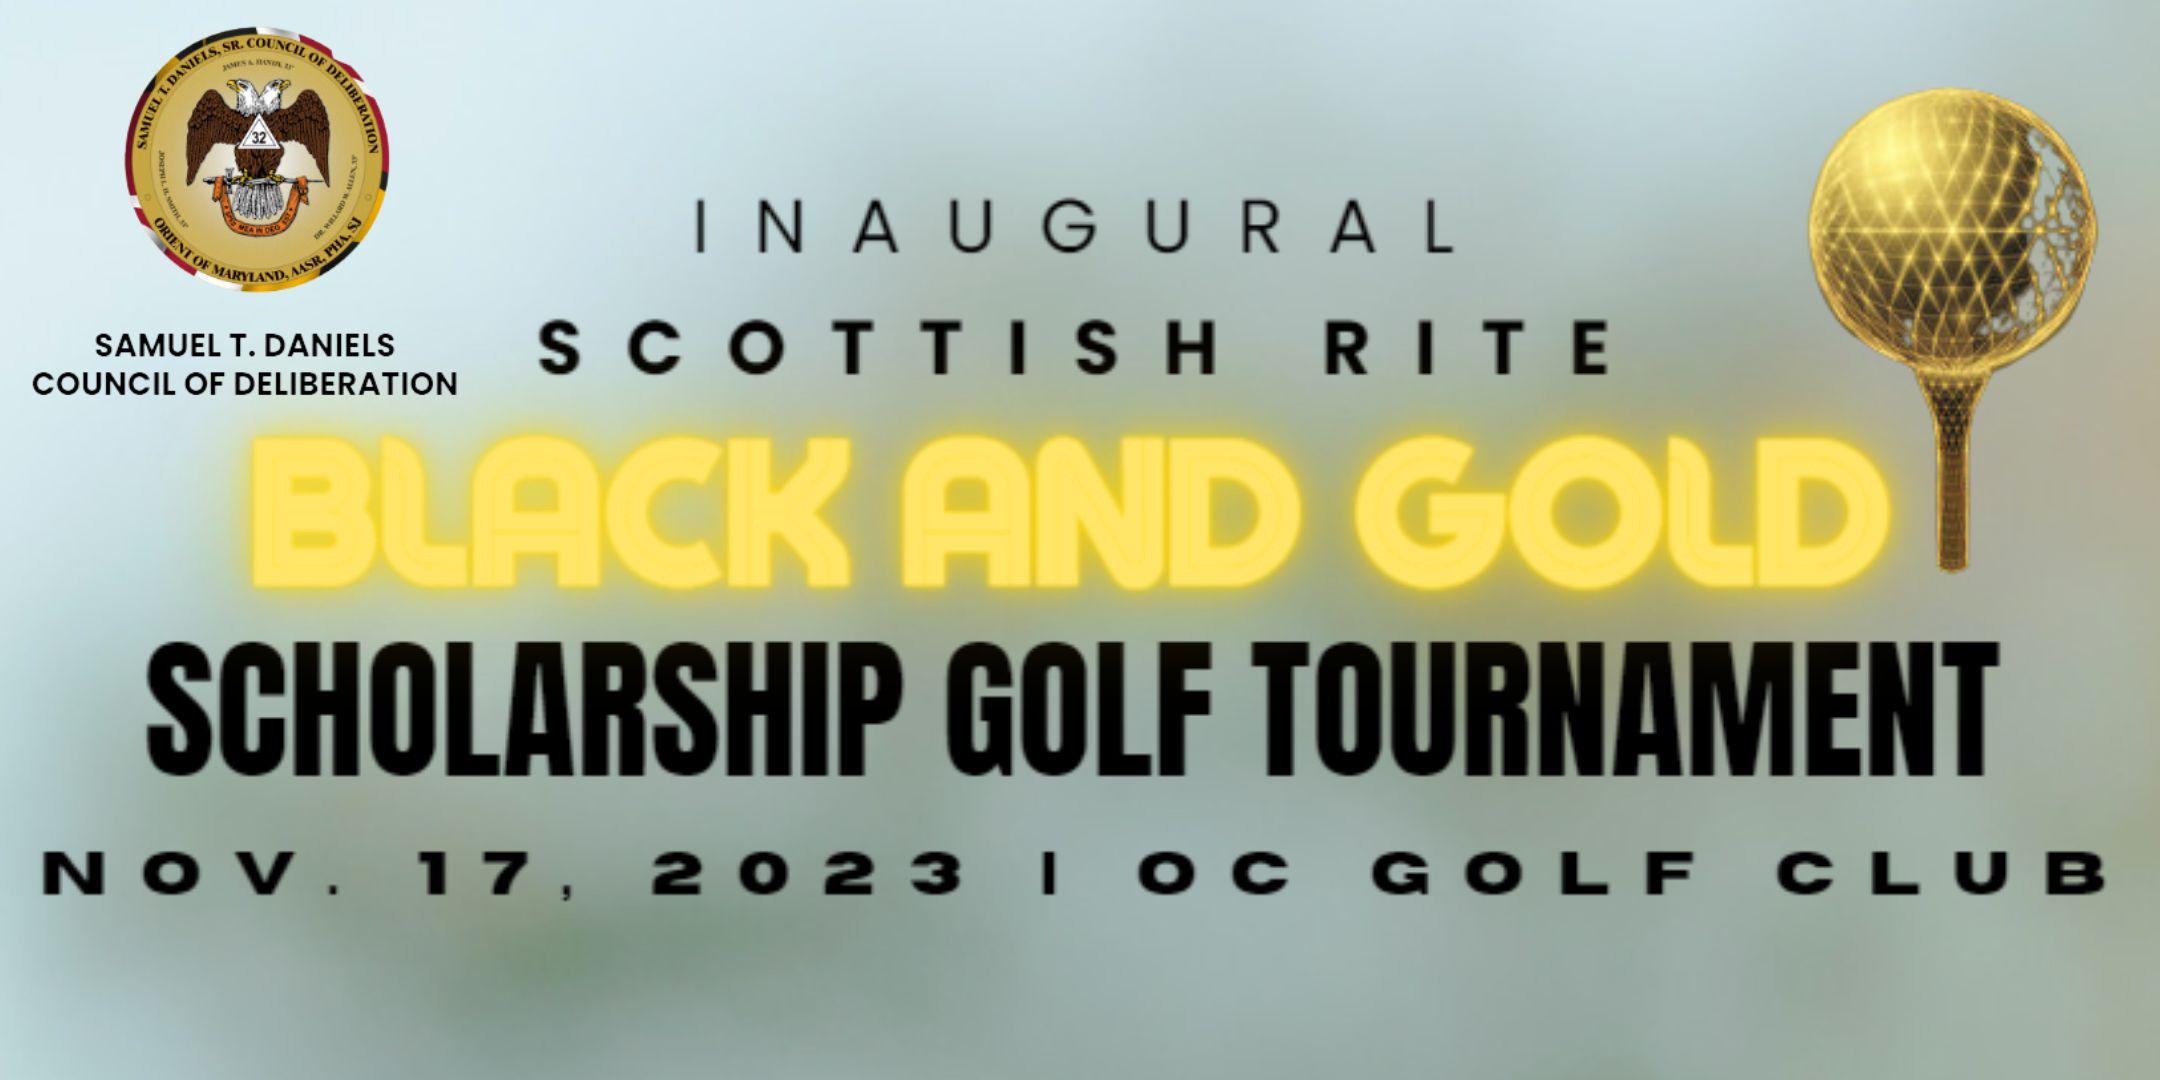 Scottish Rite Inaugural Black and Gold Scholarship Golf Tournament